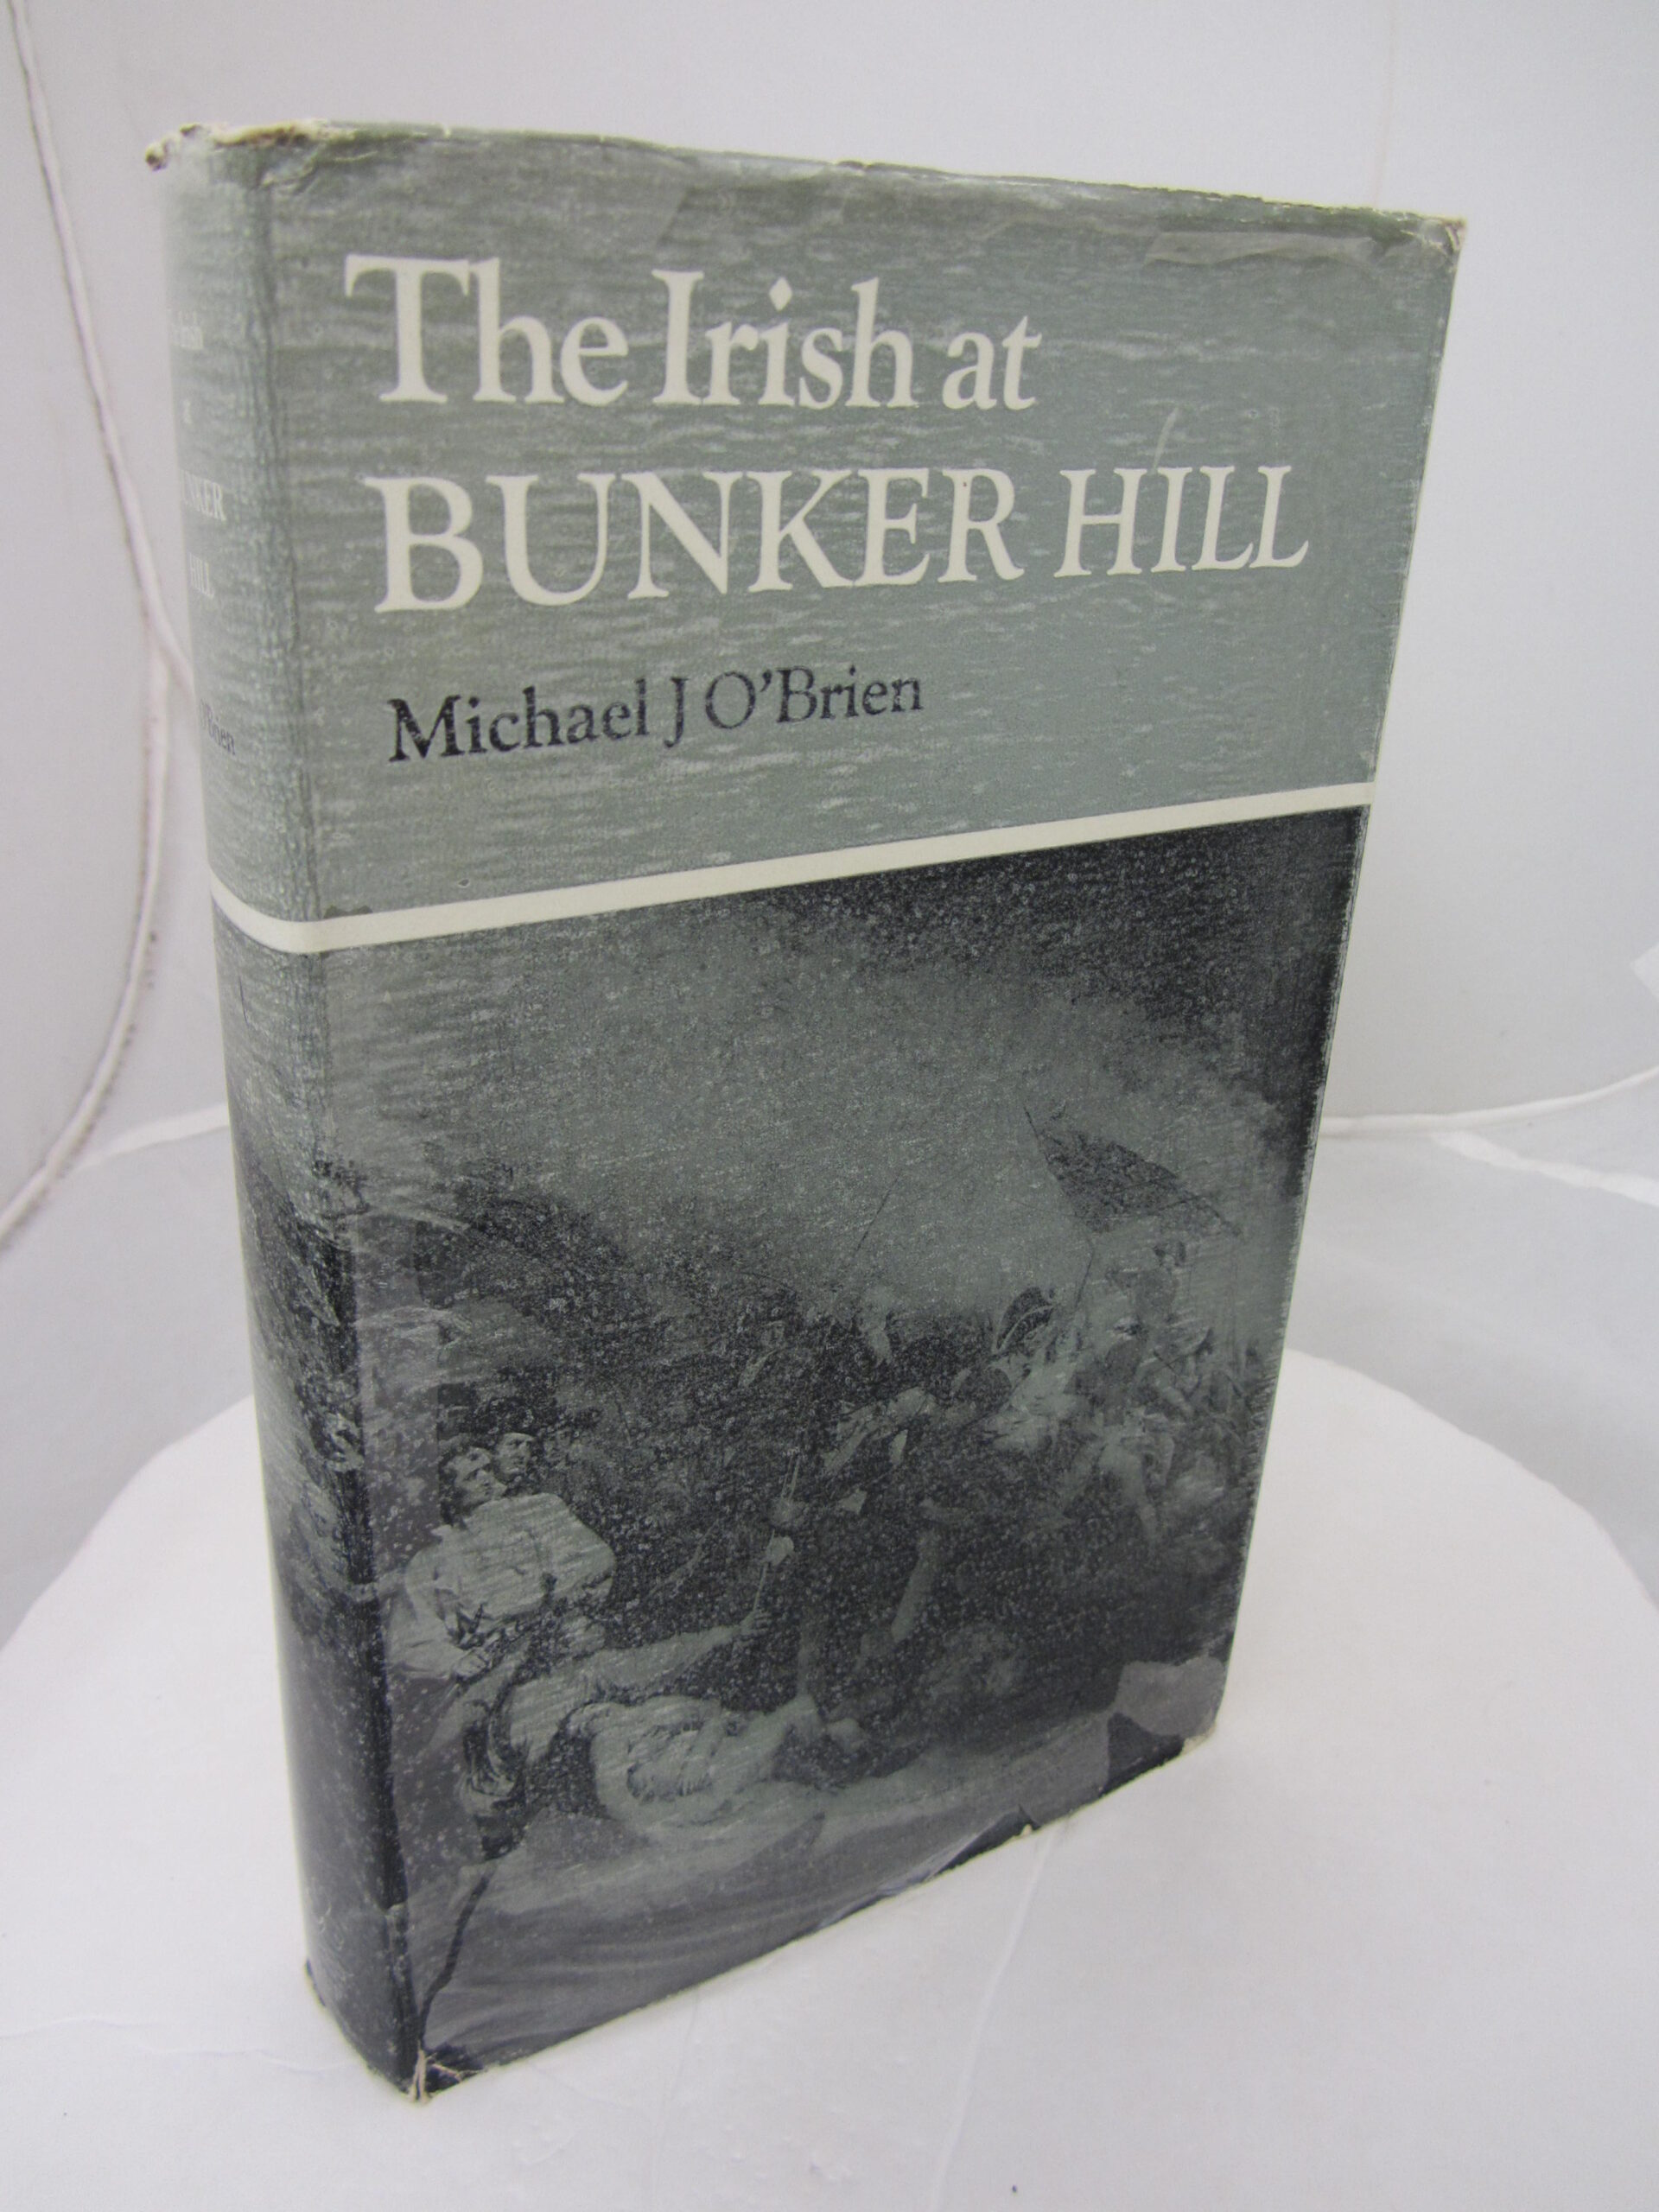 The Irish at Bunker Hill. by Michael J O'Brien